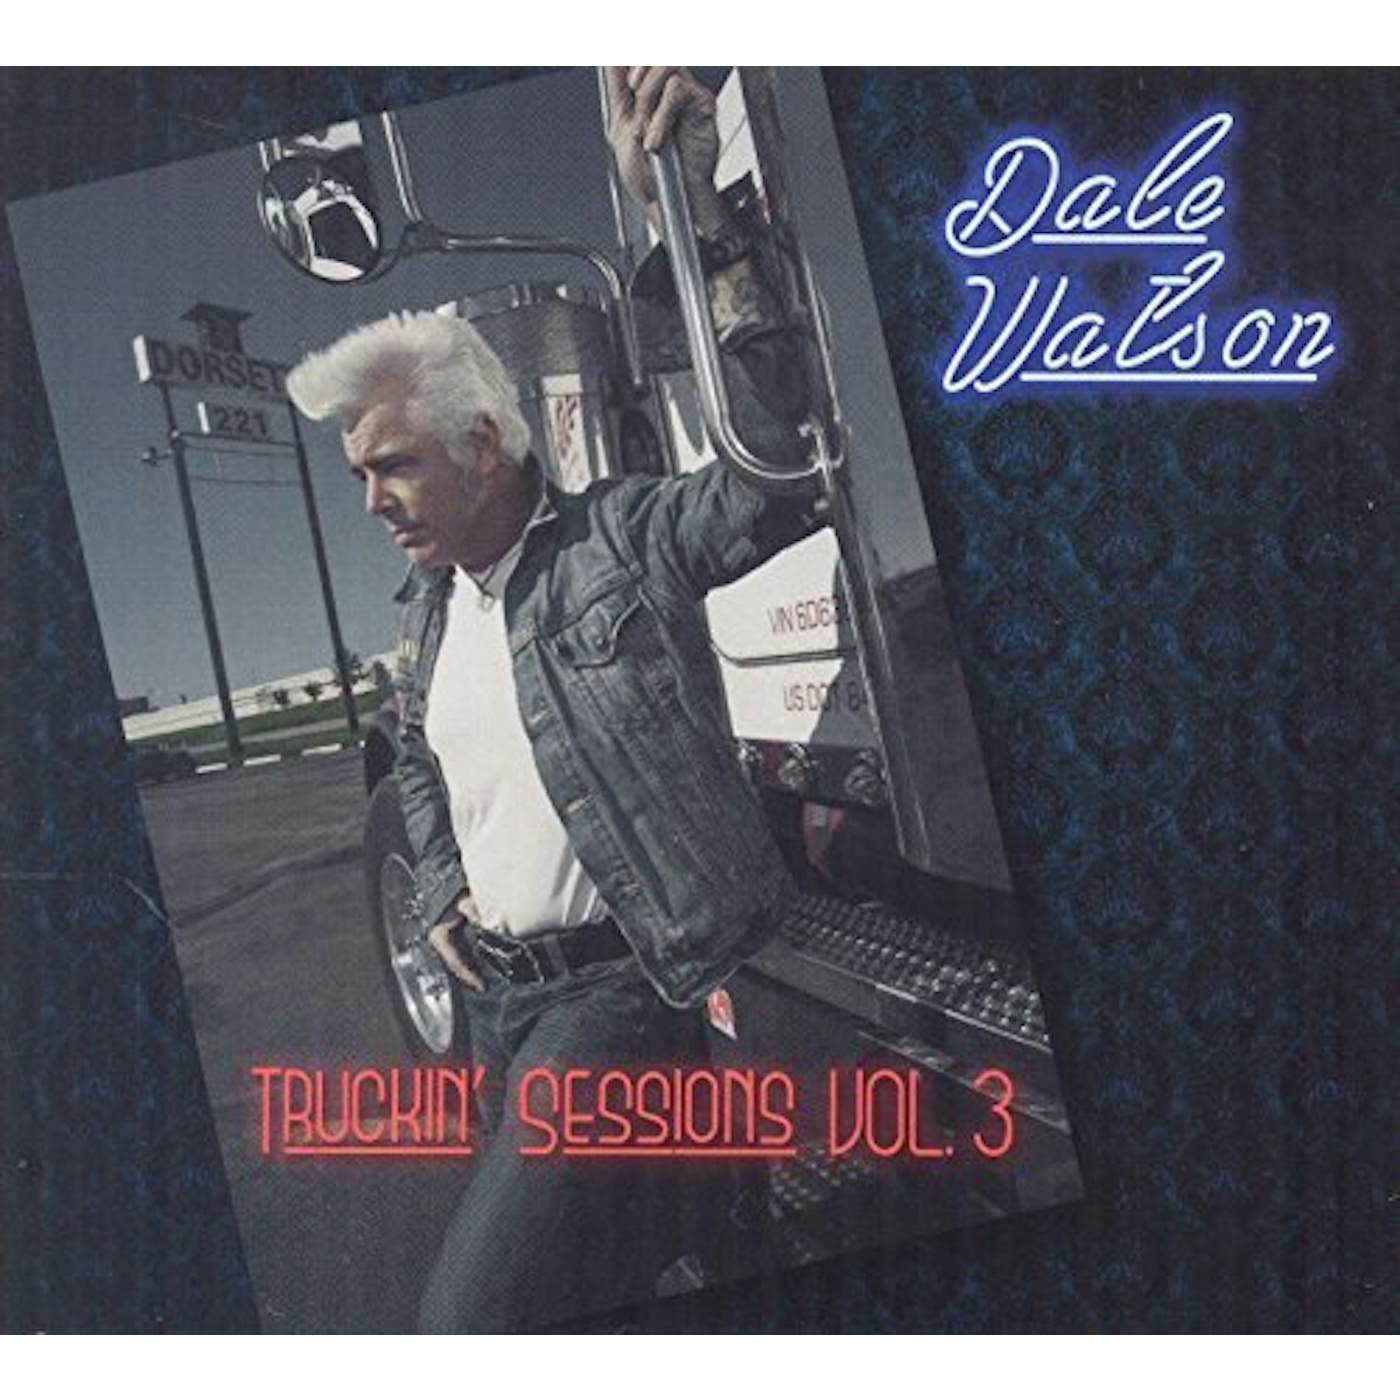 Dale Watson TRUCKIN' SESSIONS VOL. 3 CD